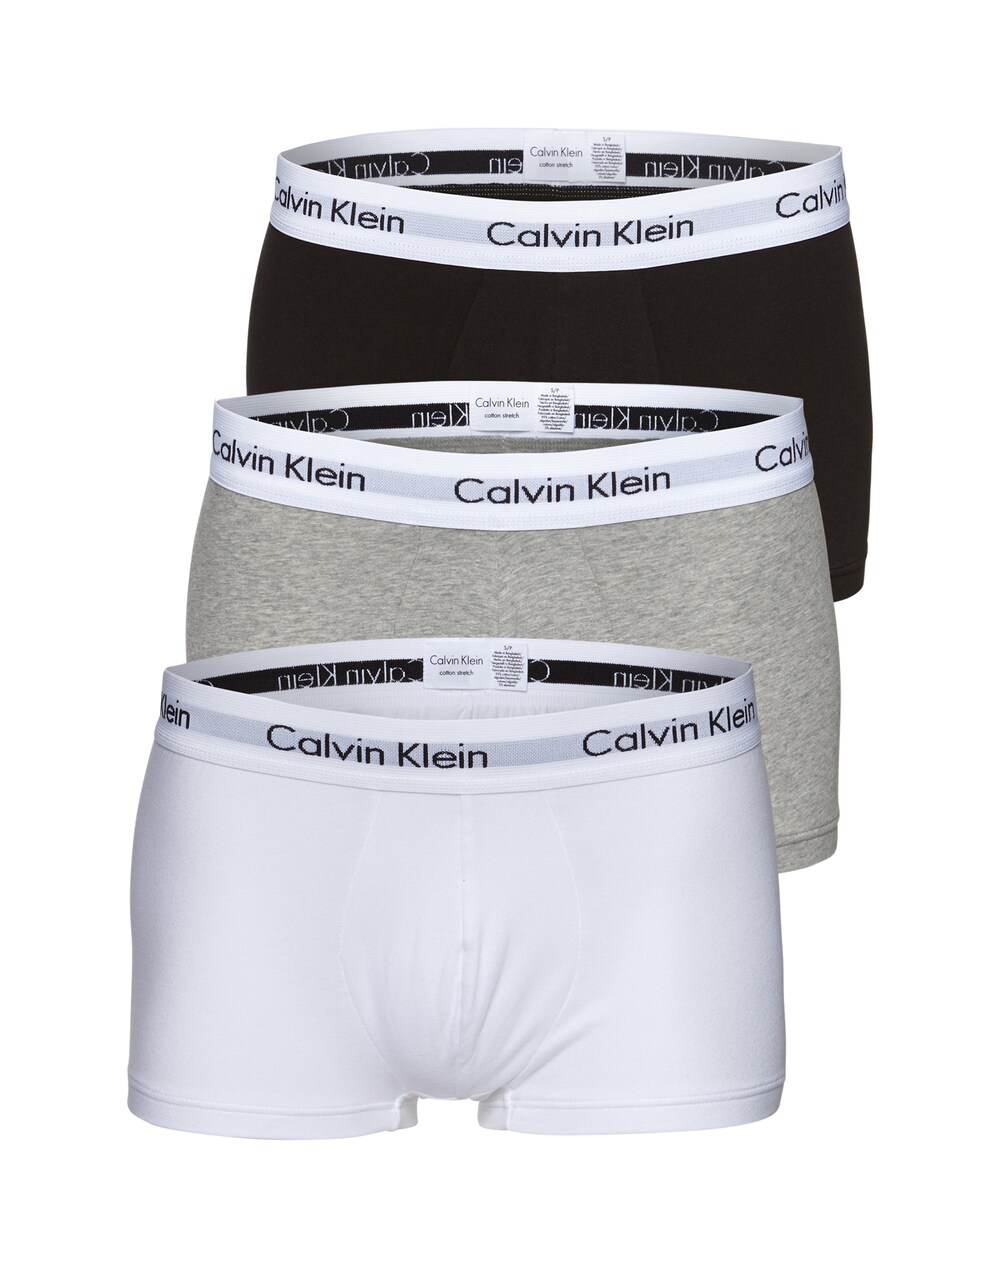 Обычные боксеры Calvin Klein, светло-серый/пестрый серый/черный/белый